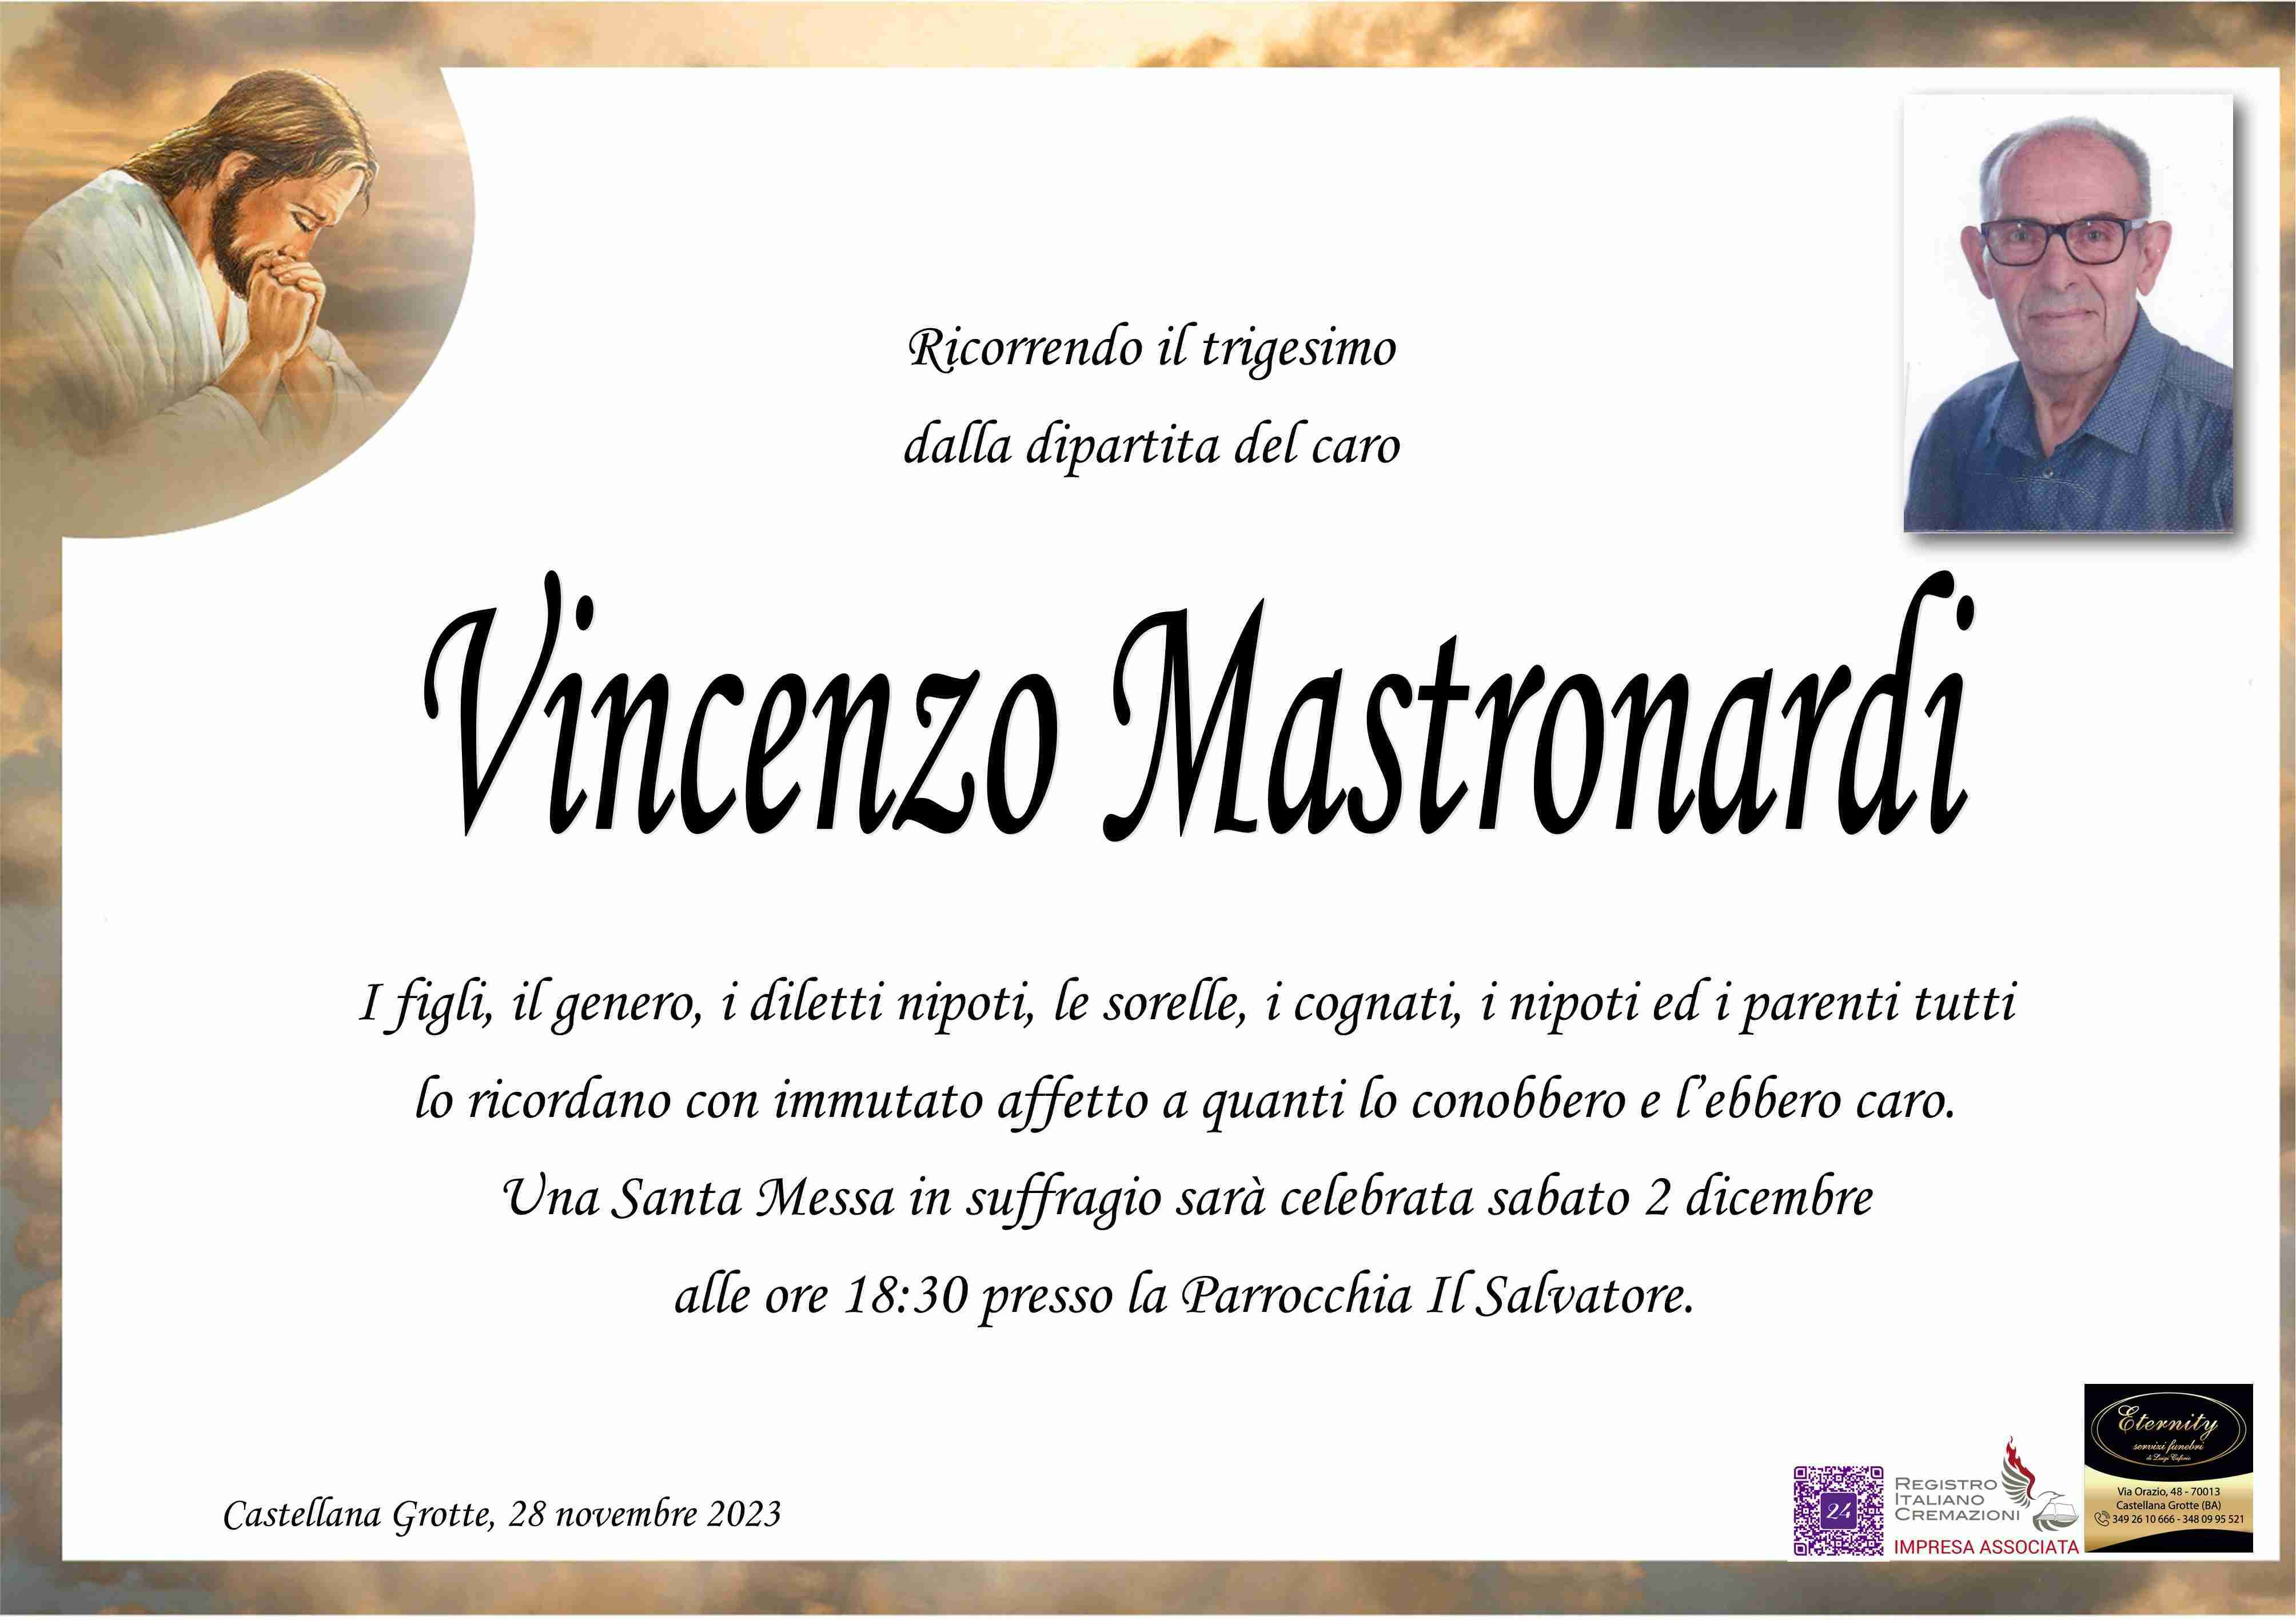 Vincenzo Mastronardi